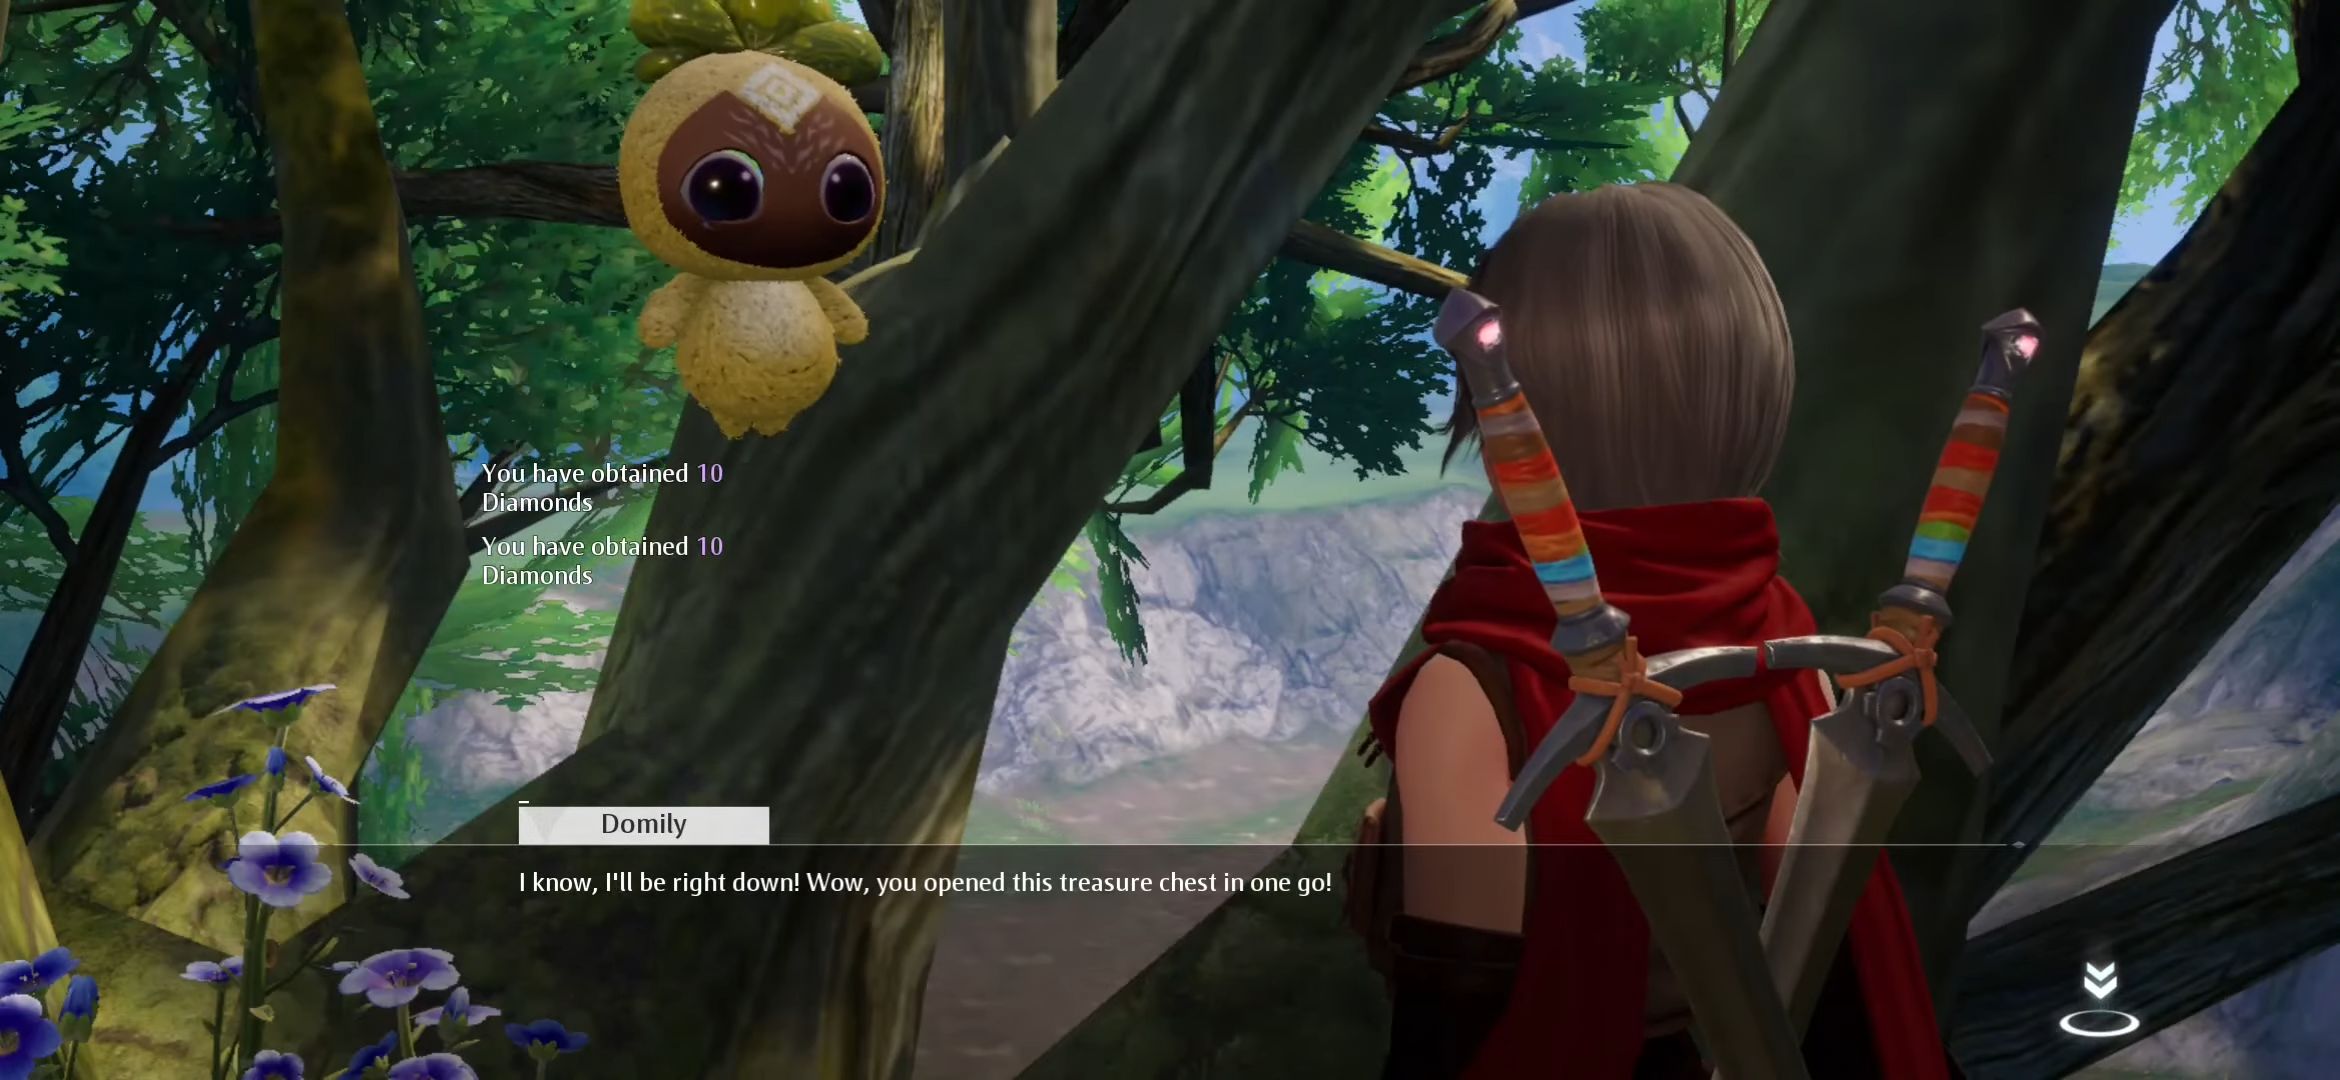 Noah's Heart - Android game screenshots.